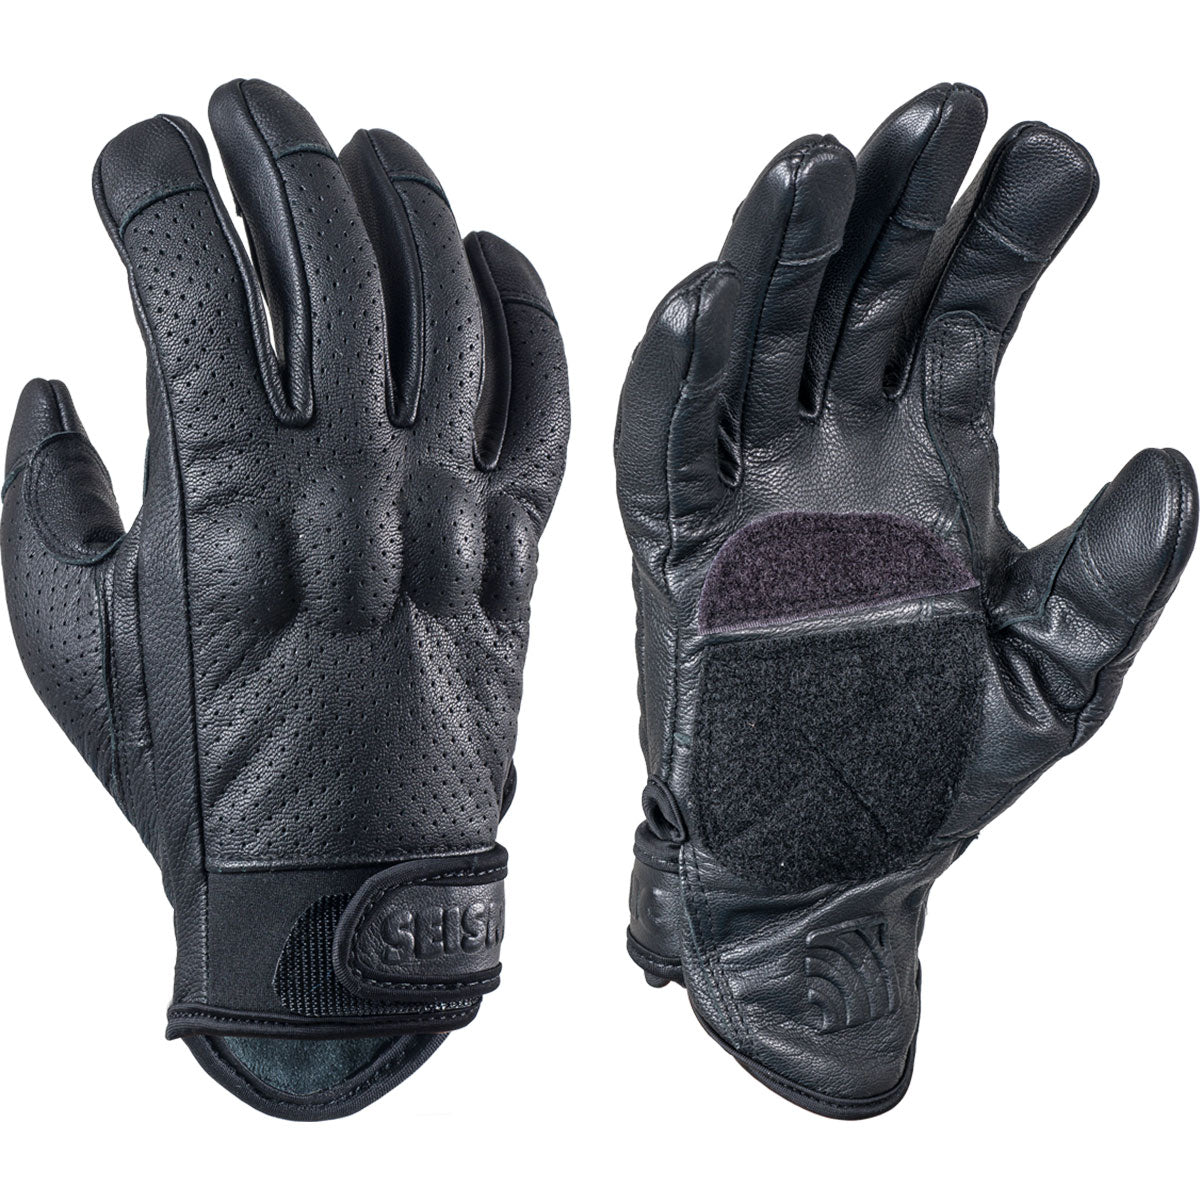 Seismic Race Gloves - Black image 1